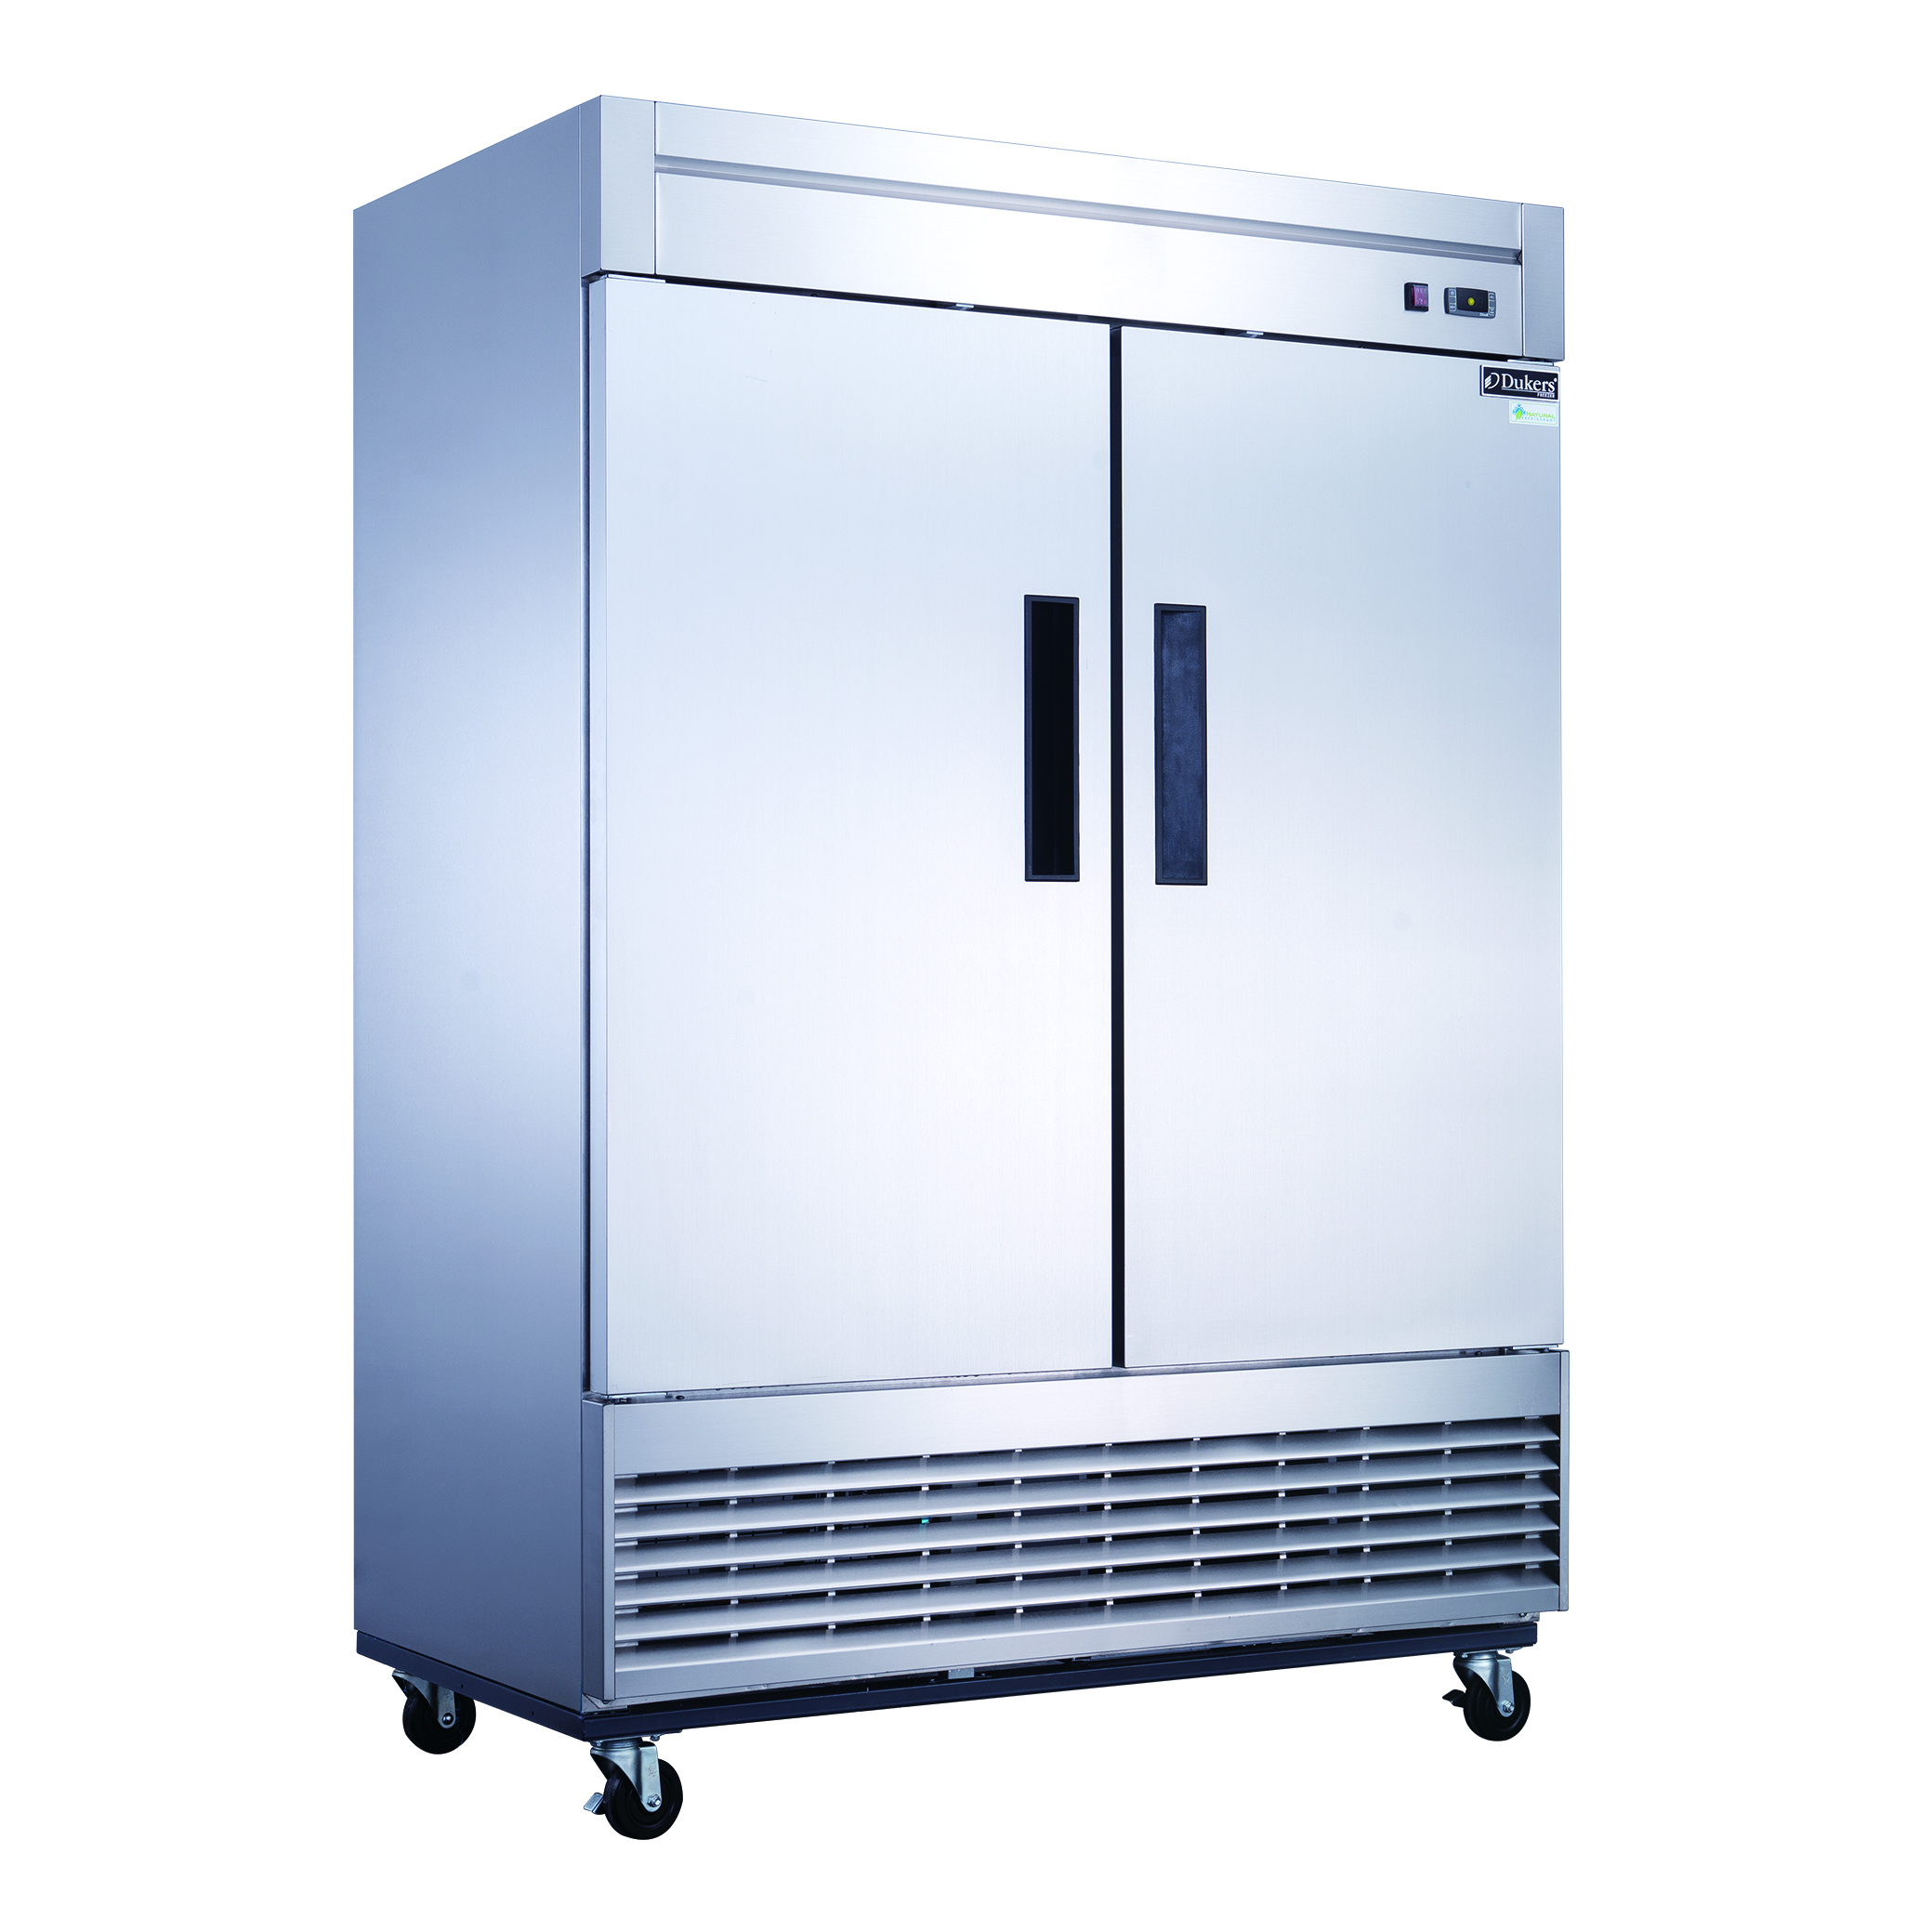 D55F 40.7 cu. ft. 2Door Commercial Freezer in Stainless Steel Dukers Appliance Co., USA Ltd